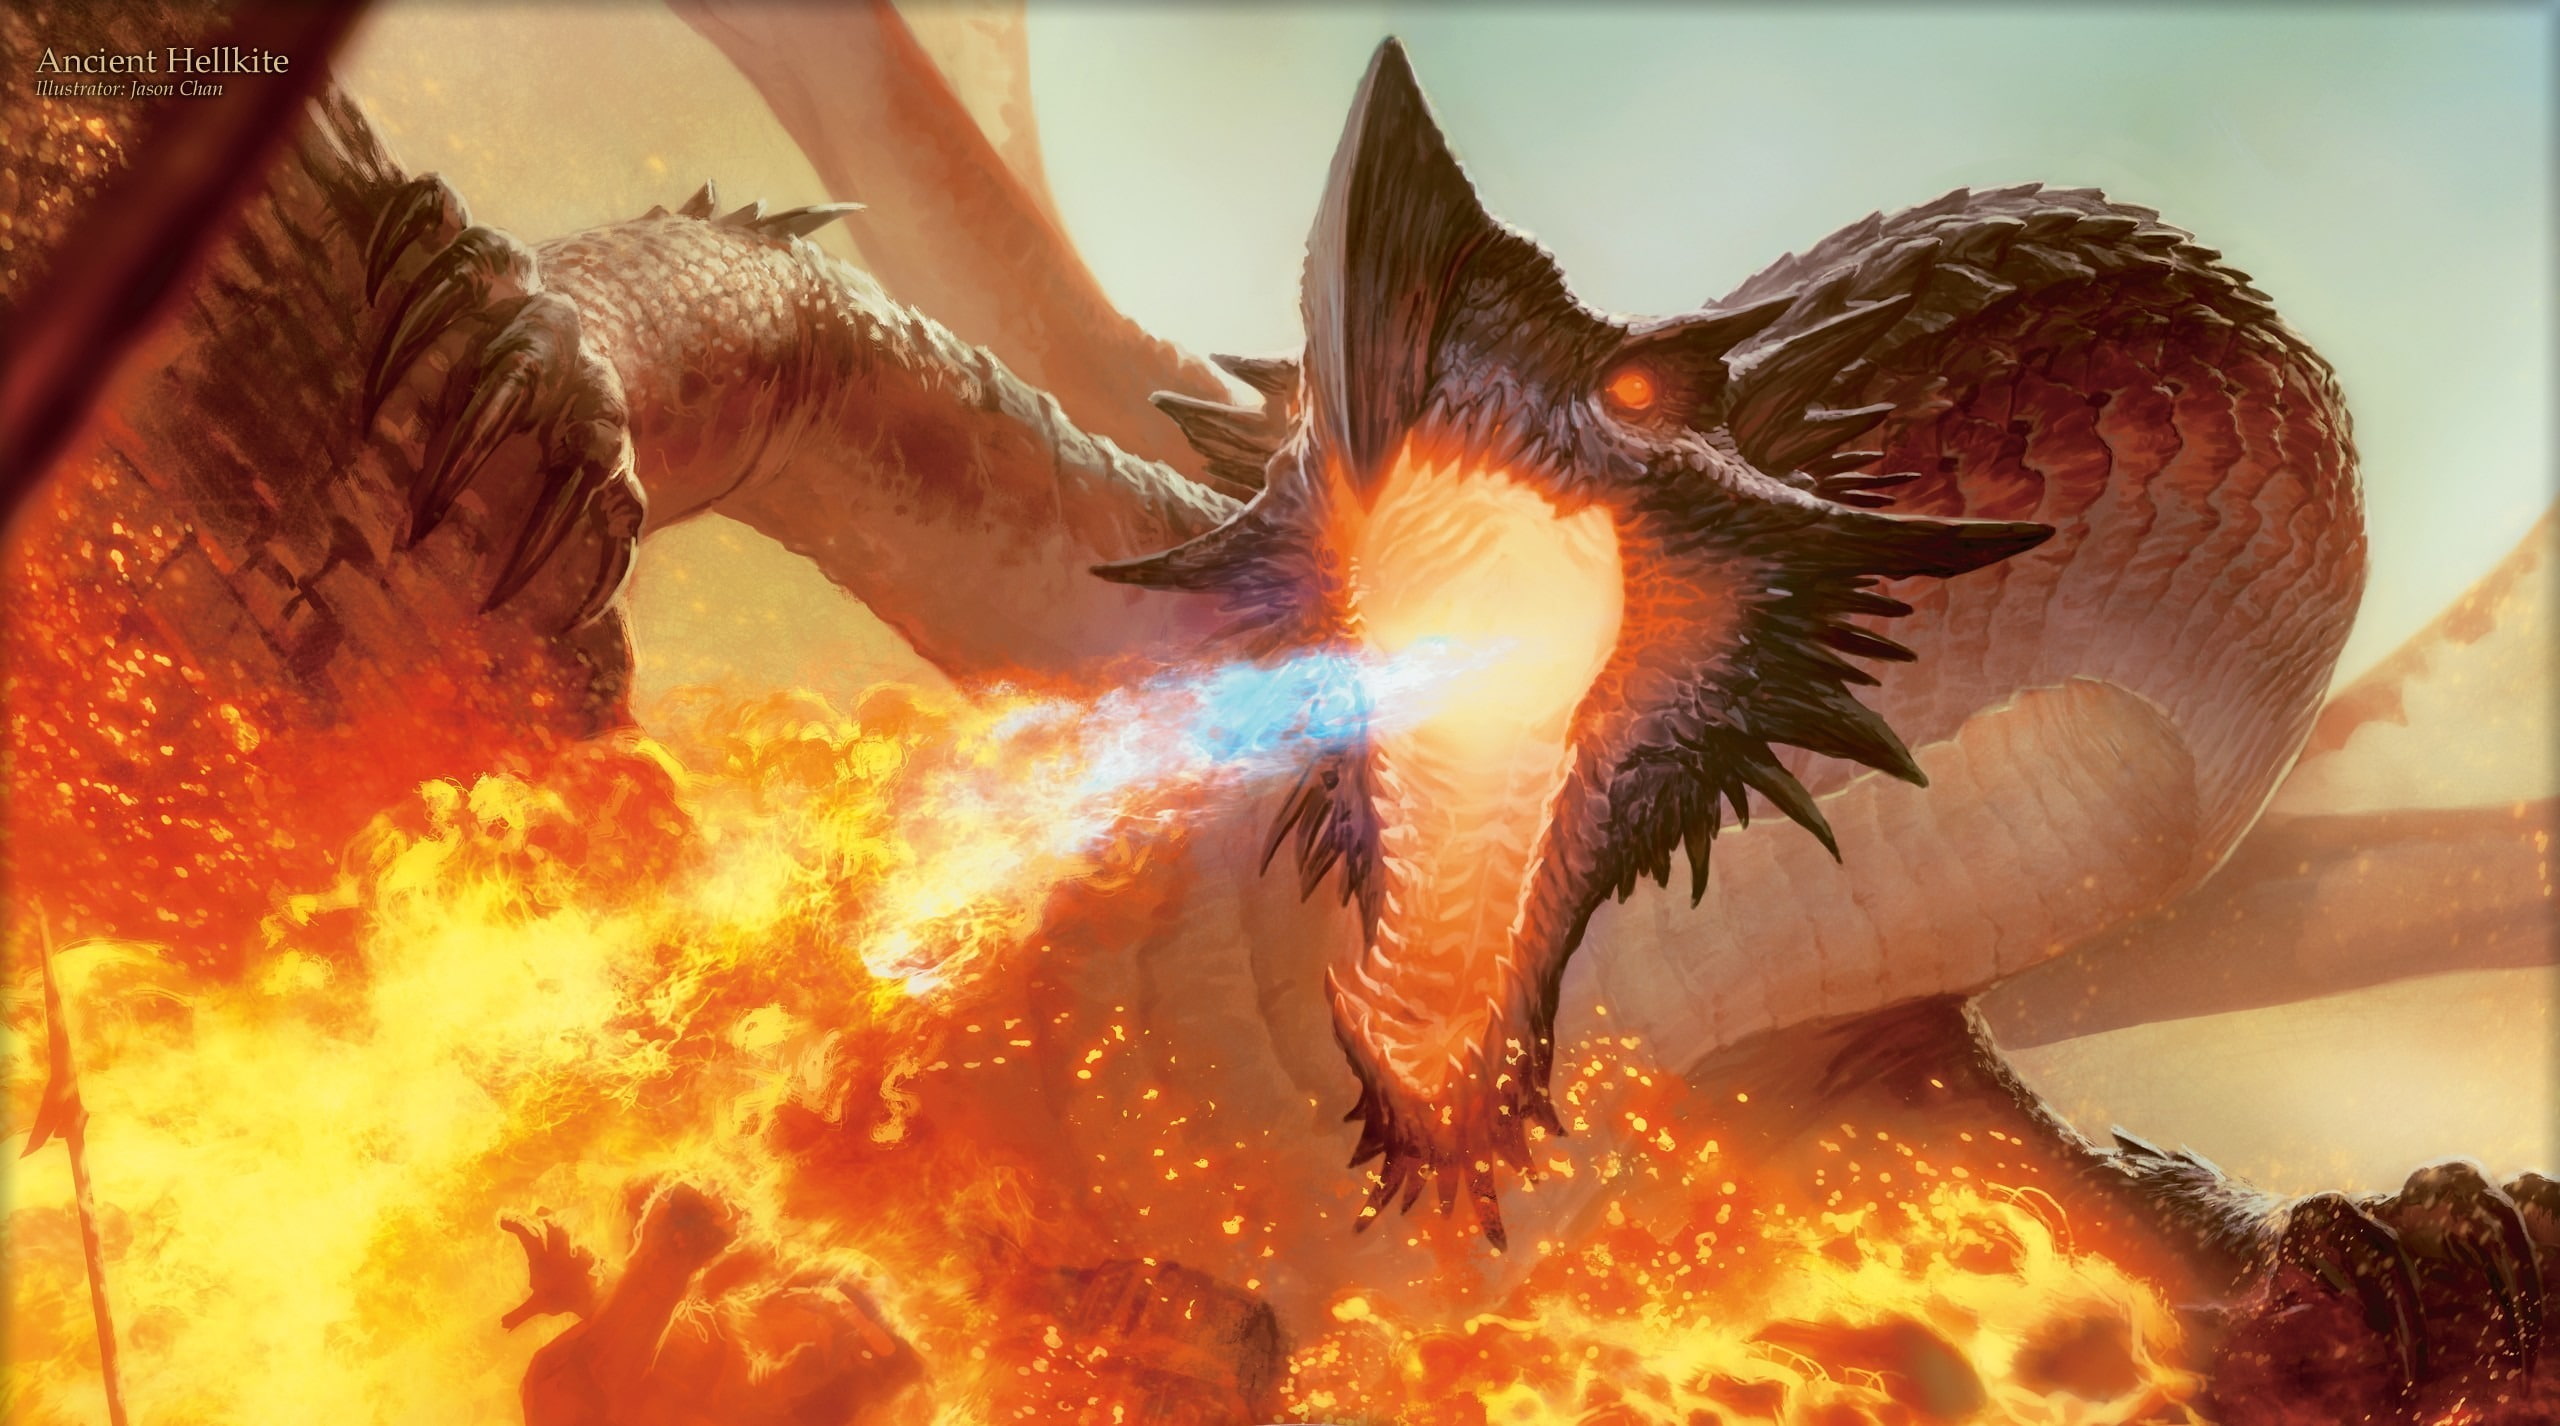 Wyrm firing flame digital wallpaper, Dragon, mouth, fire - Natural Phenomenon